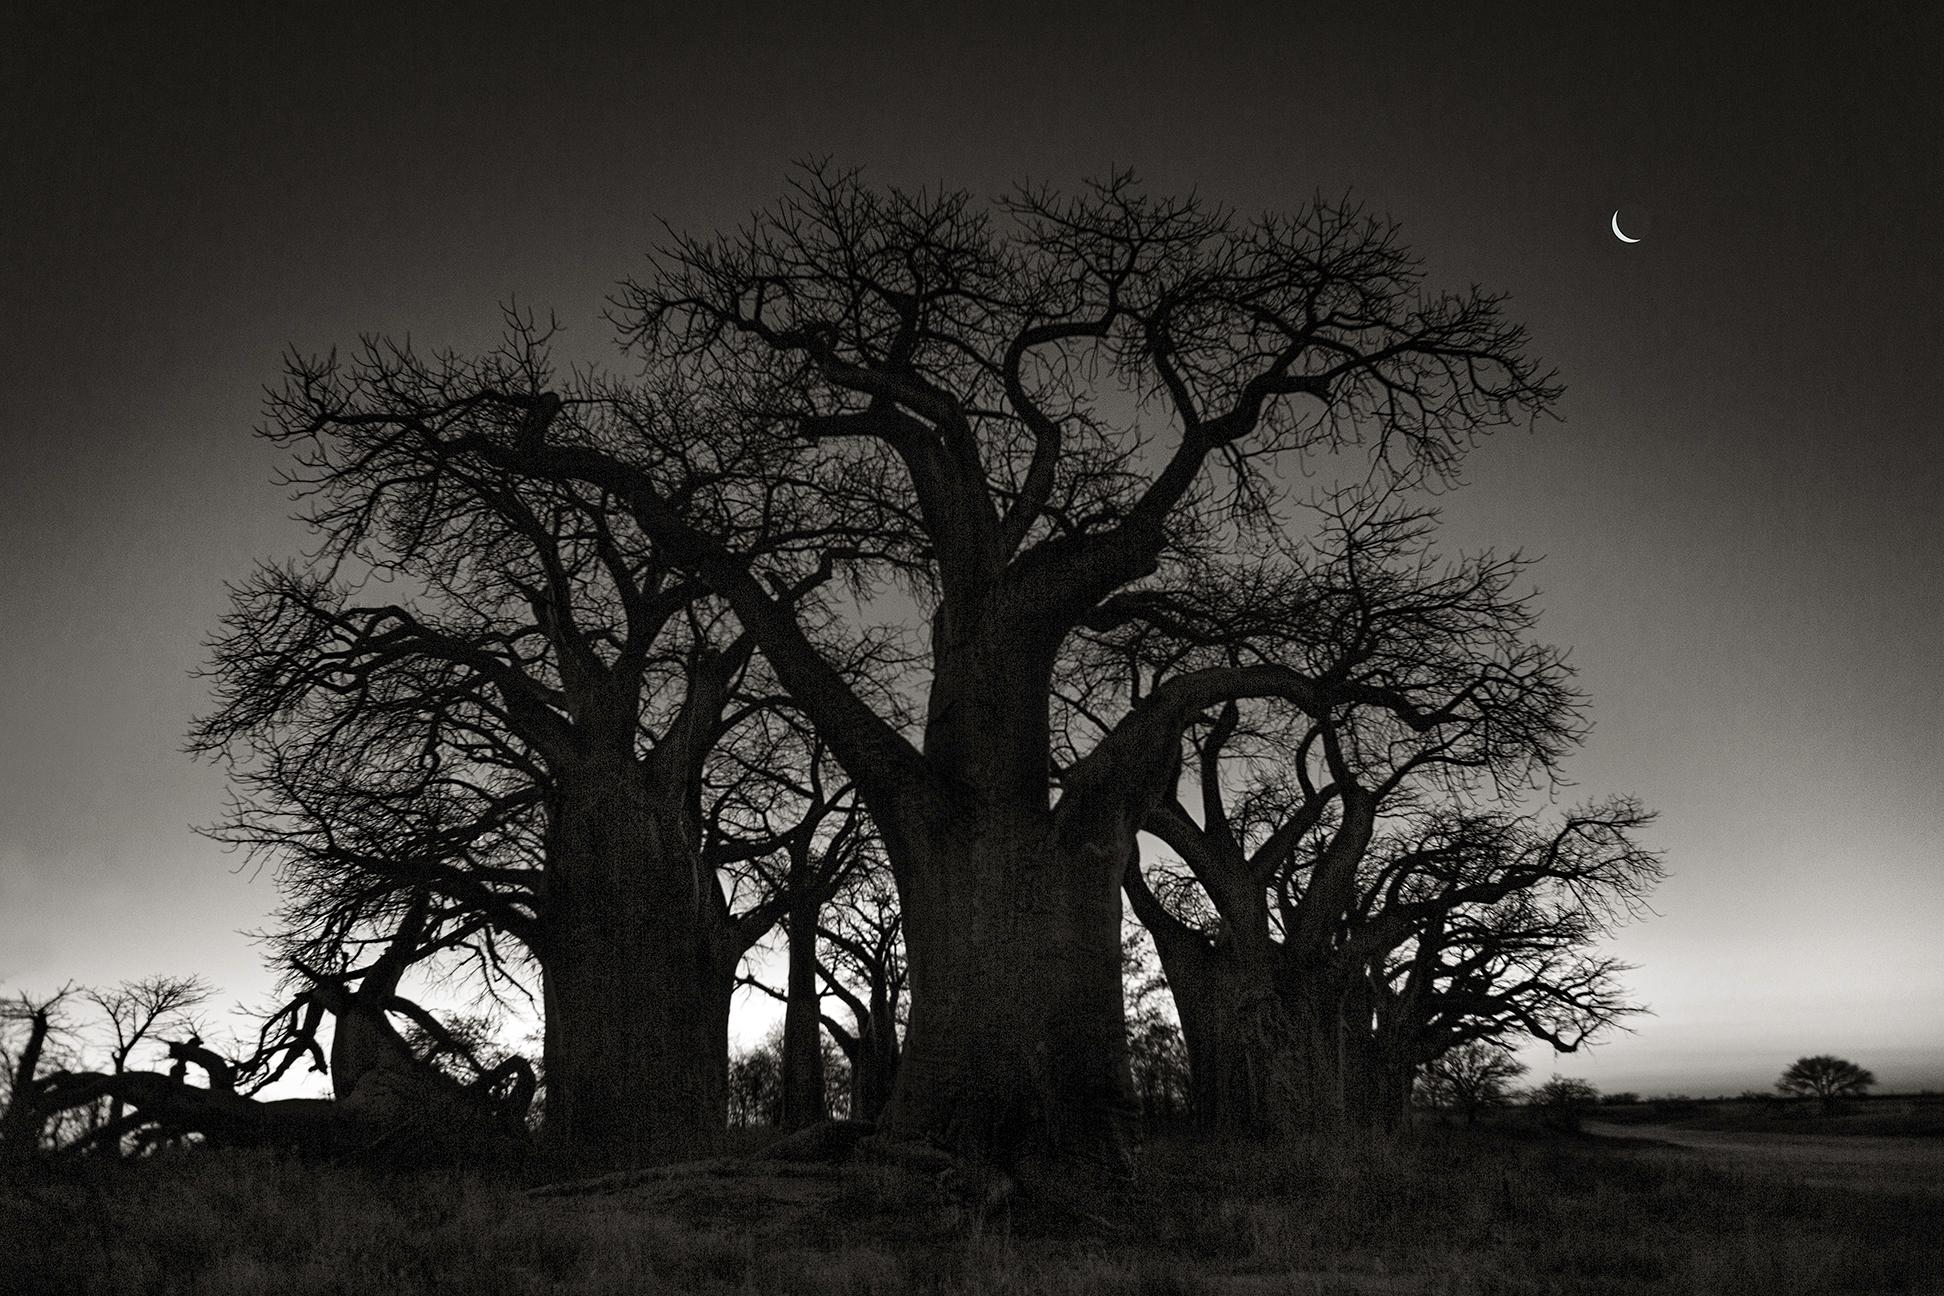 Beth Moon Black and White Photograph - Baines Circle of Seven, Botswana